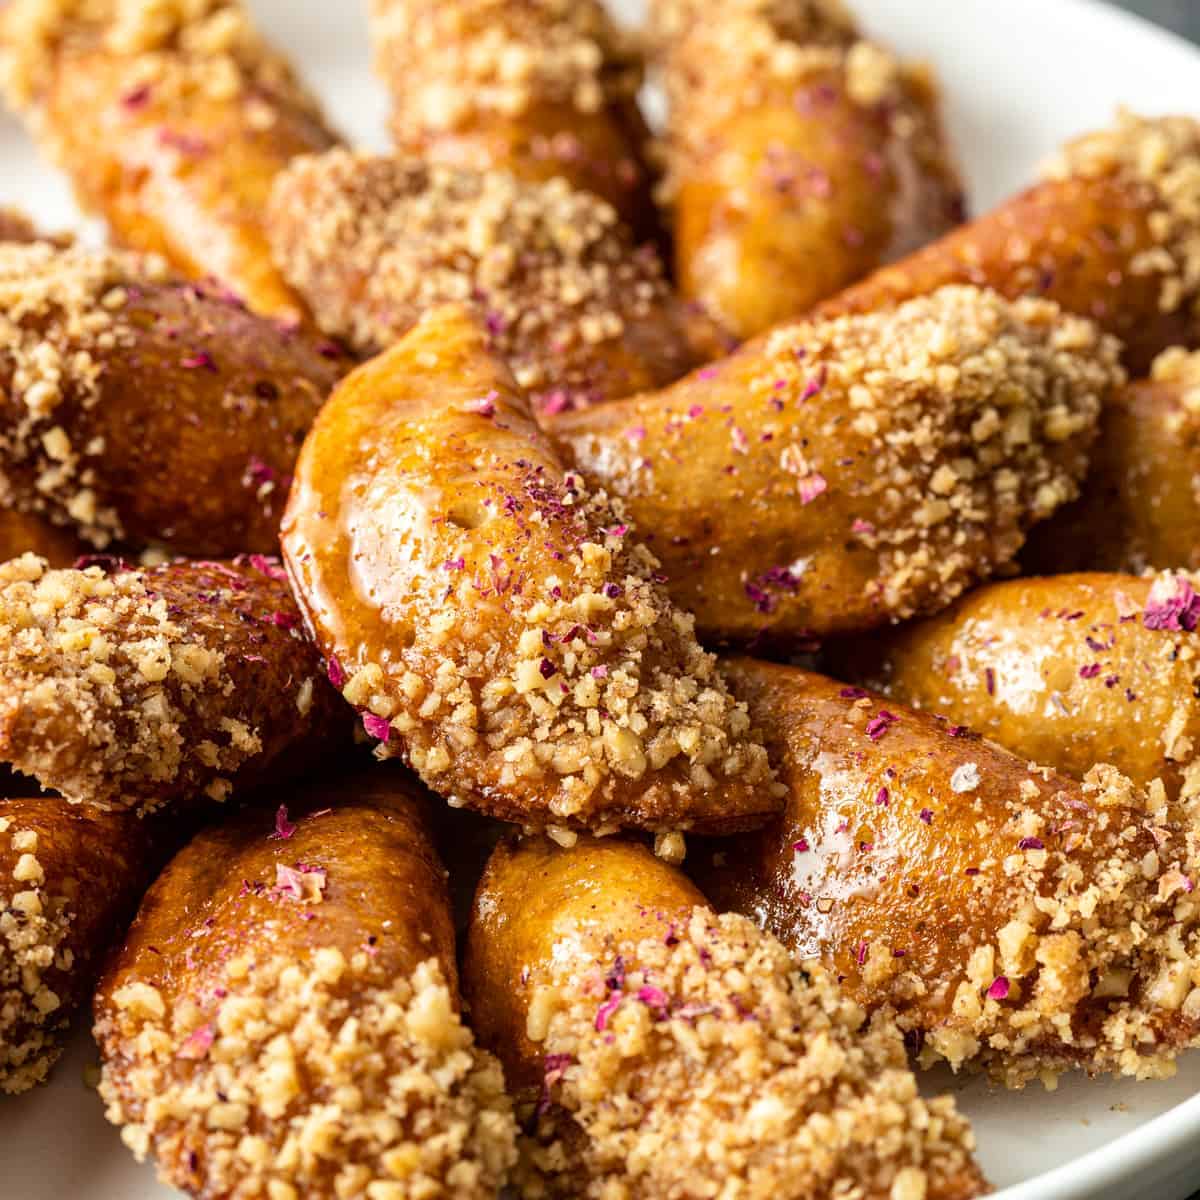 close up: fried Qatayef (stuffed pancakes) dipped in crushed walnuts